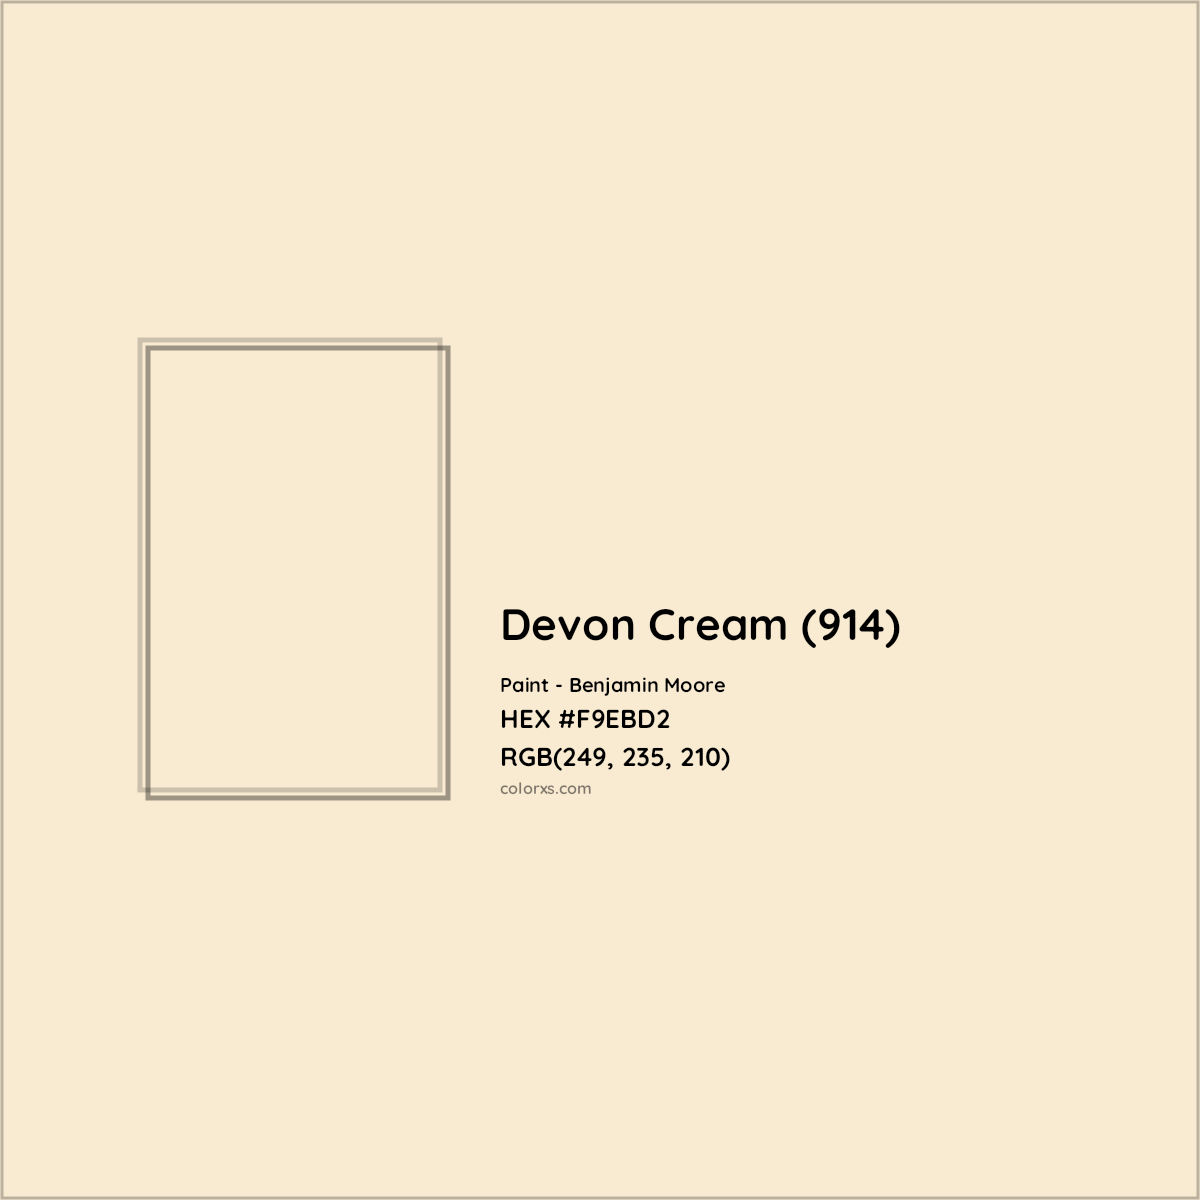 HEX #F9EBD2 Devon Cream (914) Paint Benjamin Moore - Color Code